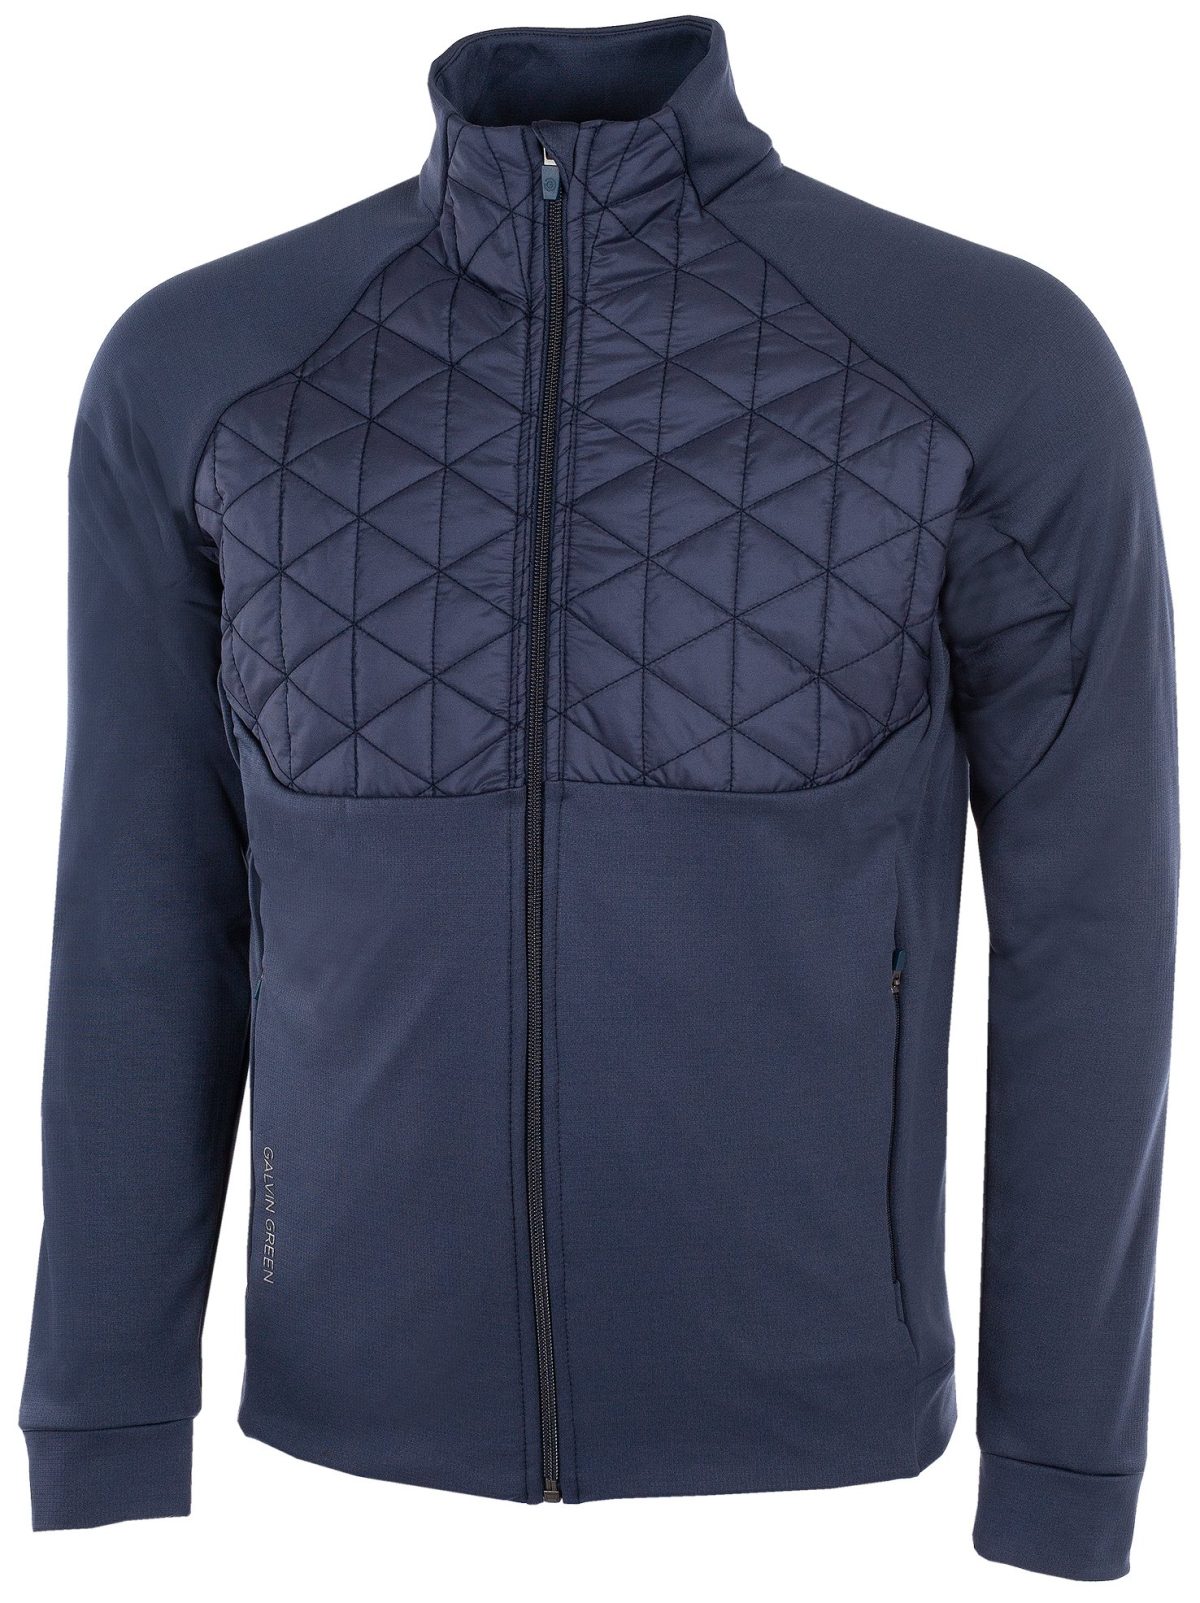 Galvin Green Men's Dexter Golf Jacket, 100% Polyester in Navy, Size M